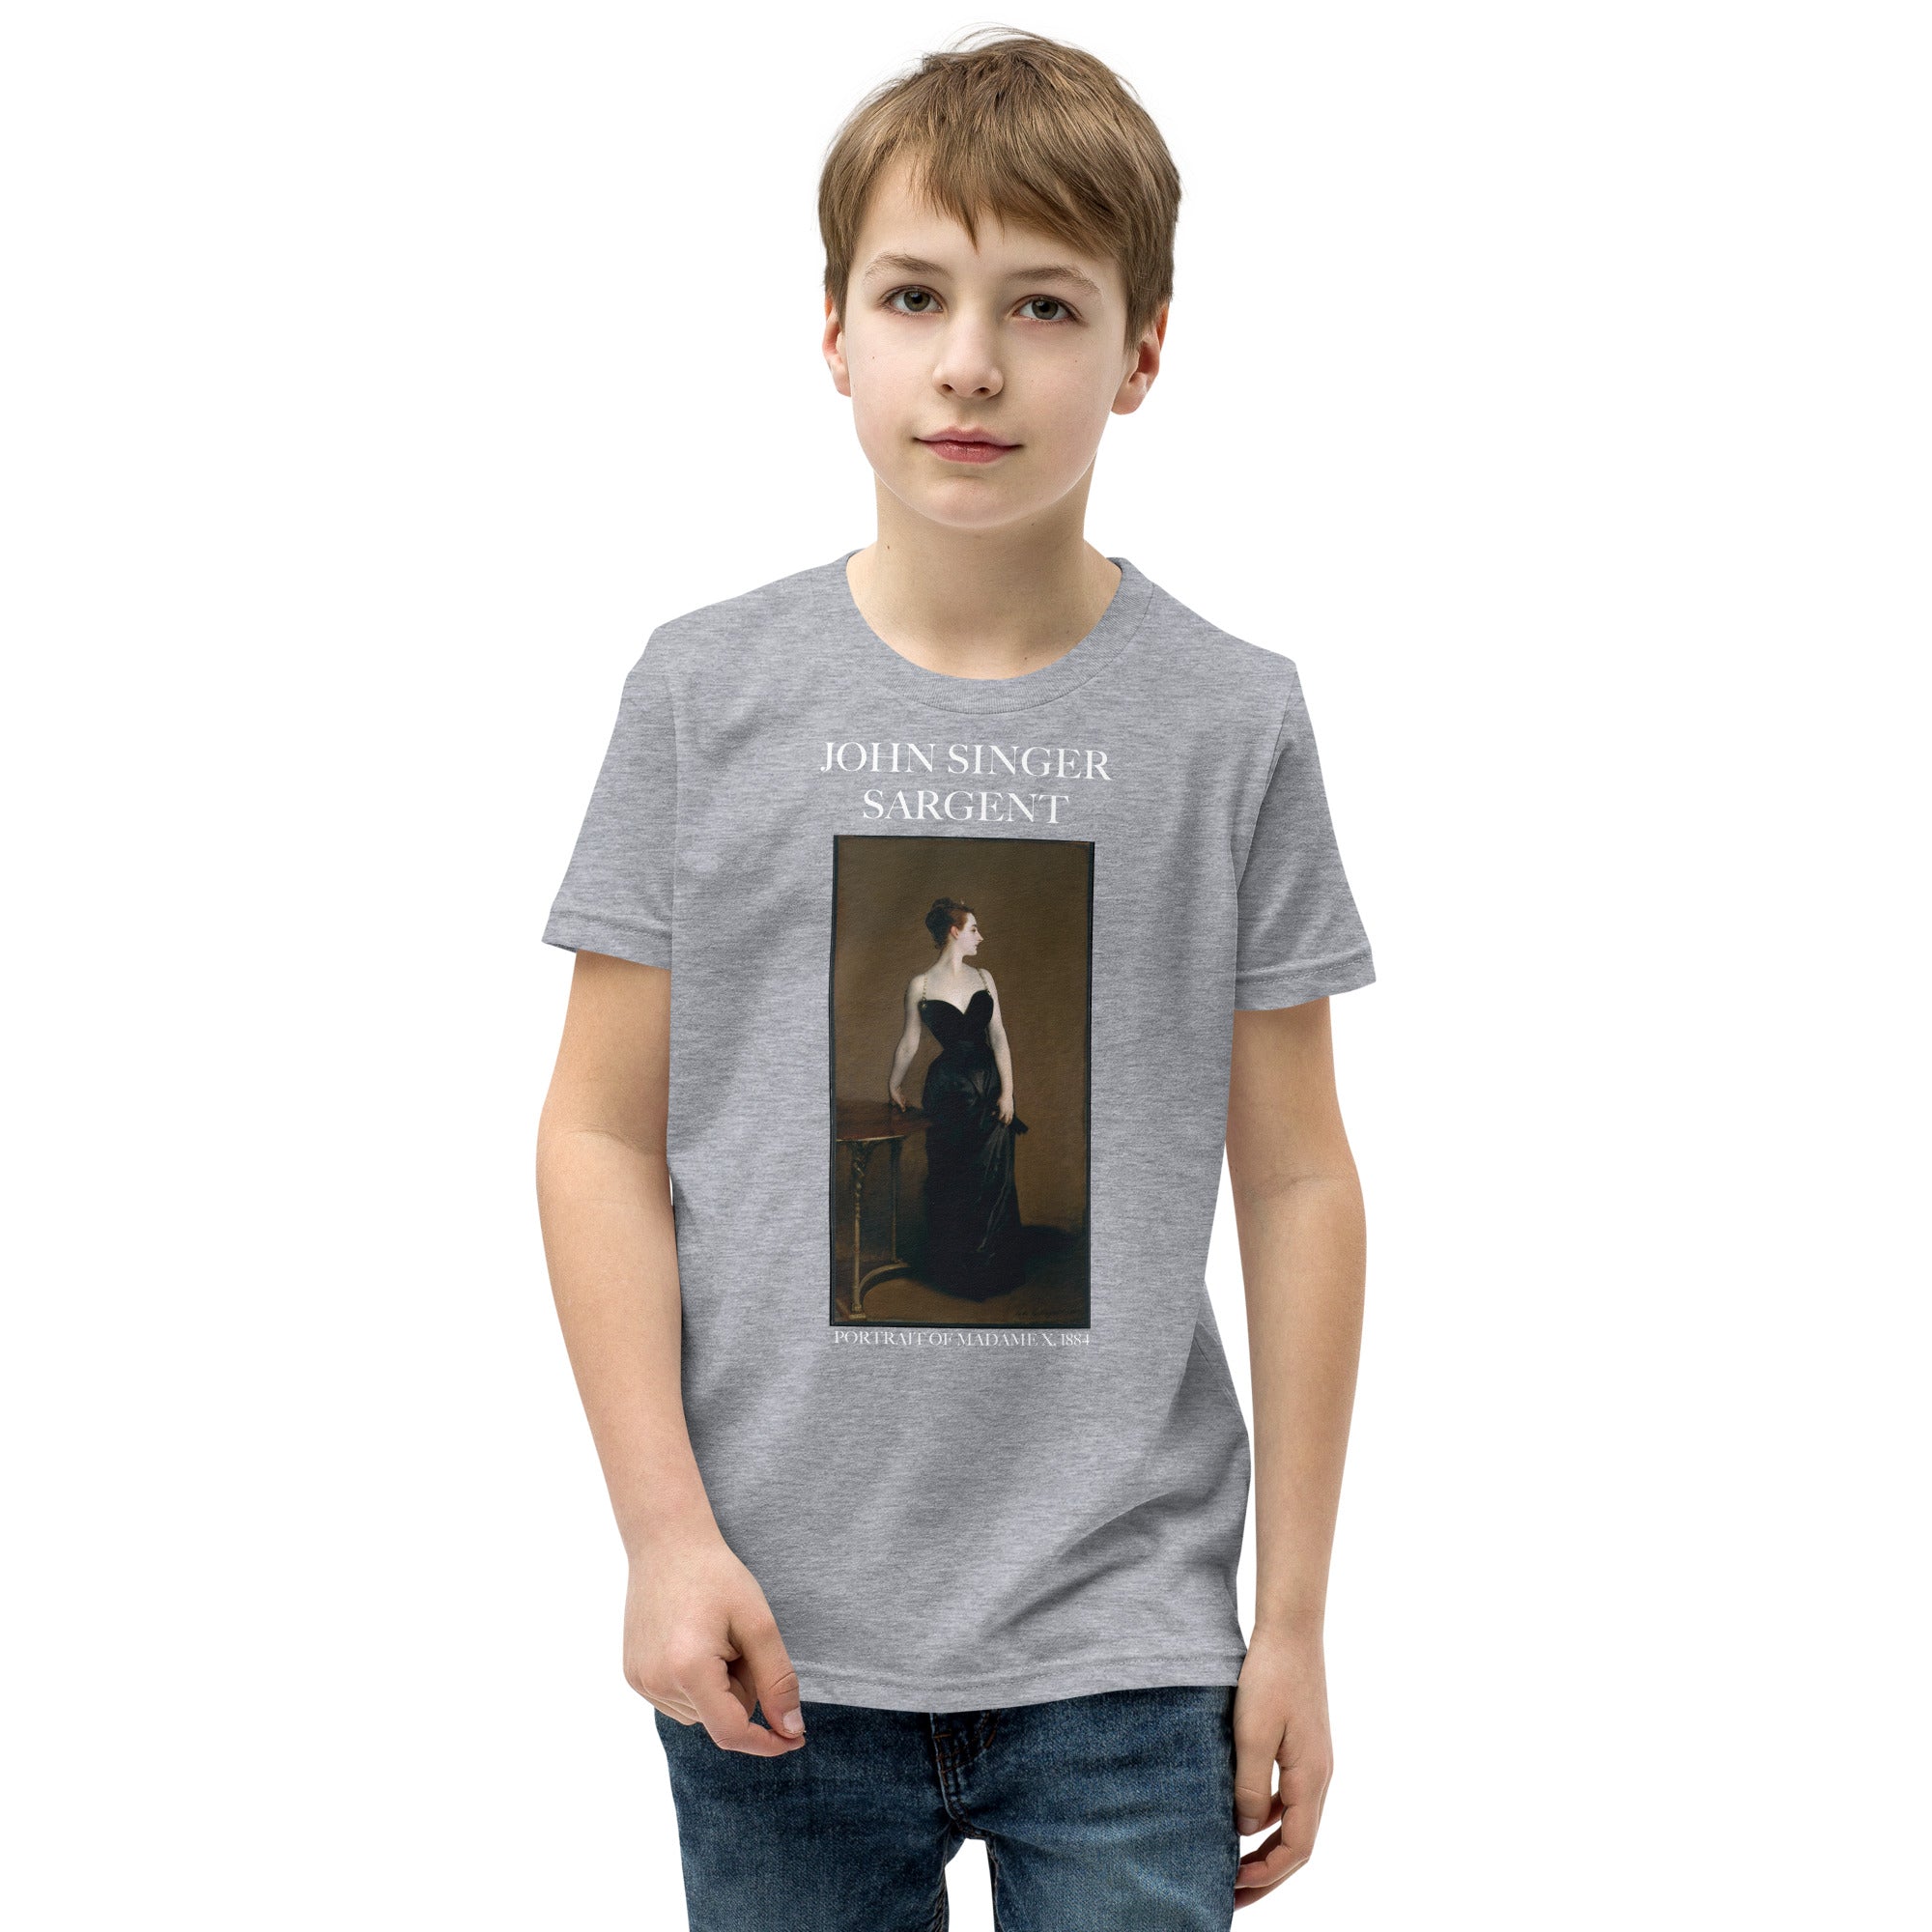 John Singer Sargent 'Portrait of Madame X' Berühmtes Gemälde Kurzärmeliges T-Shirt | Premium Jugend Art T-Shirt